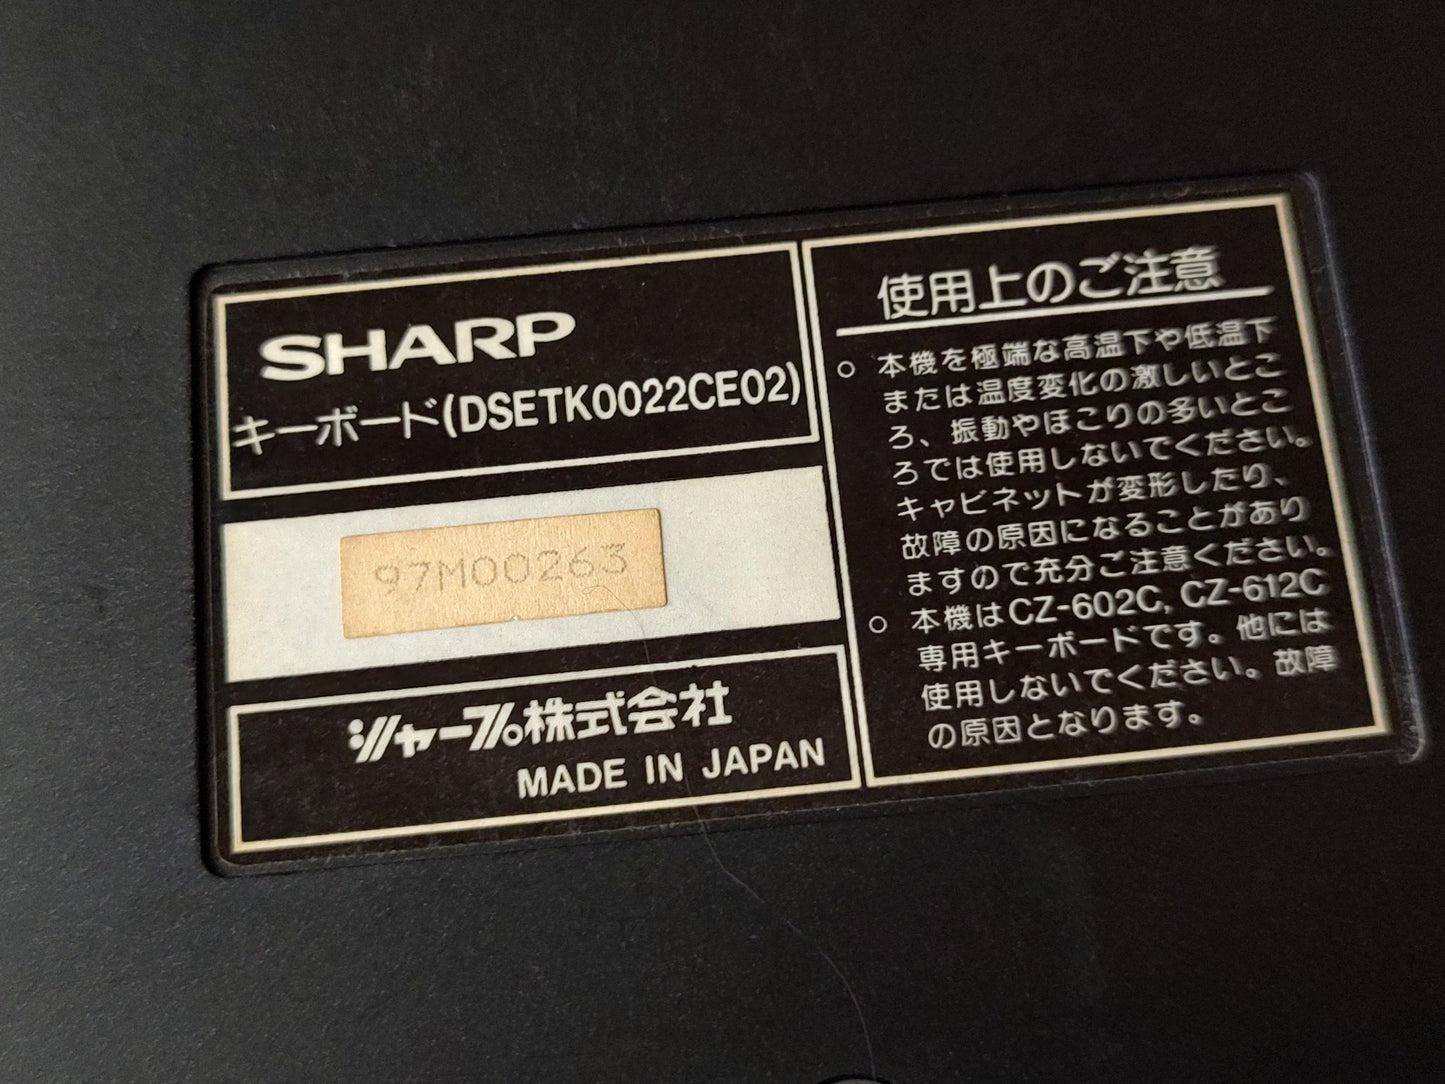 SHARP X68000 Original KEYBOARD DSETK0022CE02, Working-f0522-